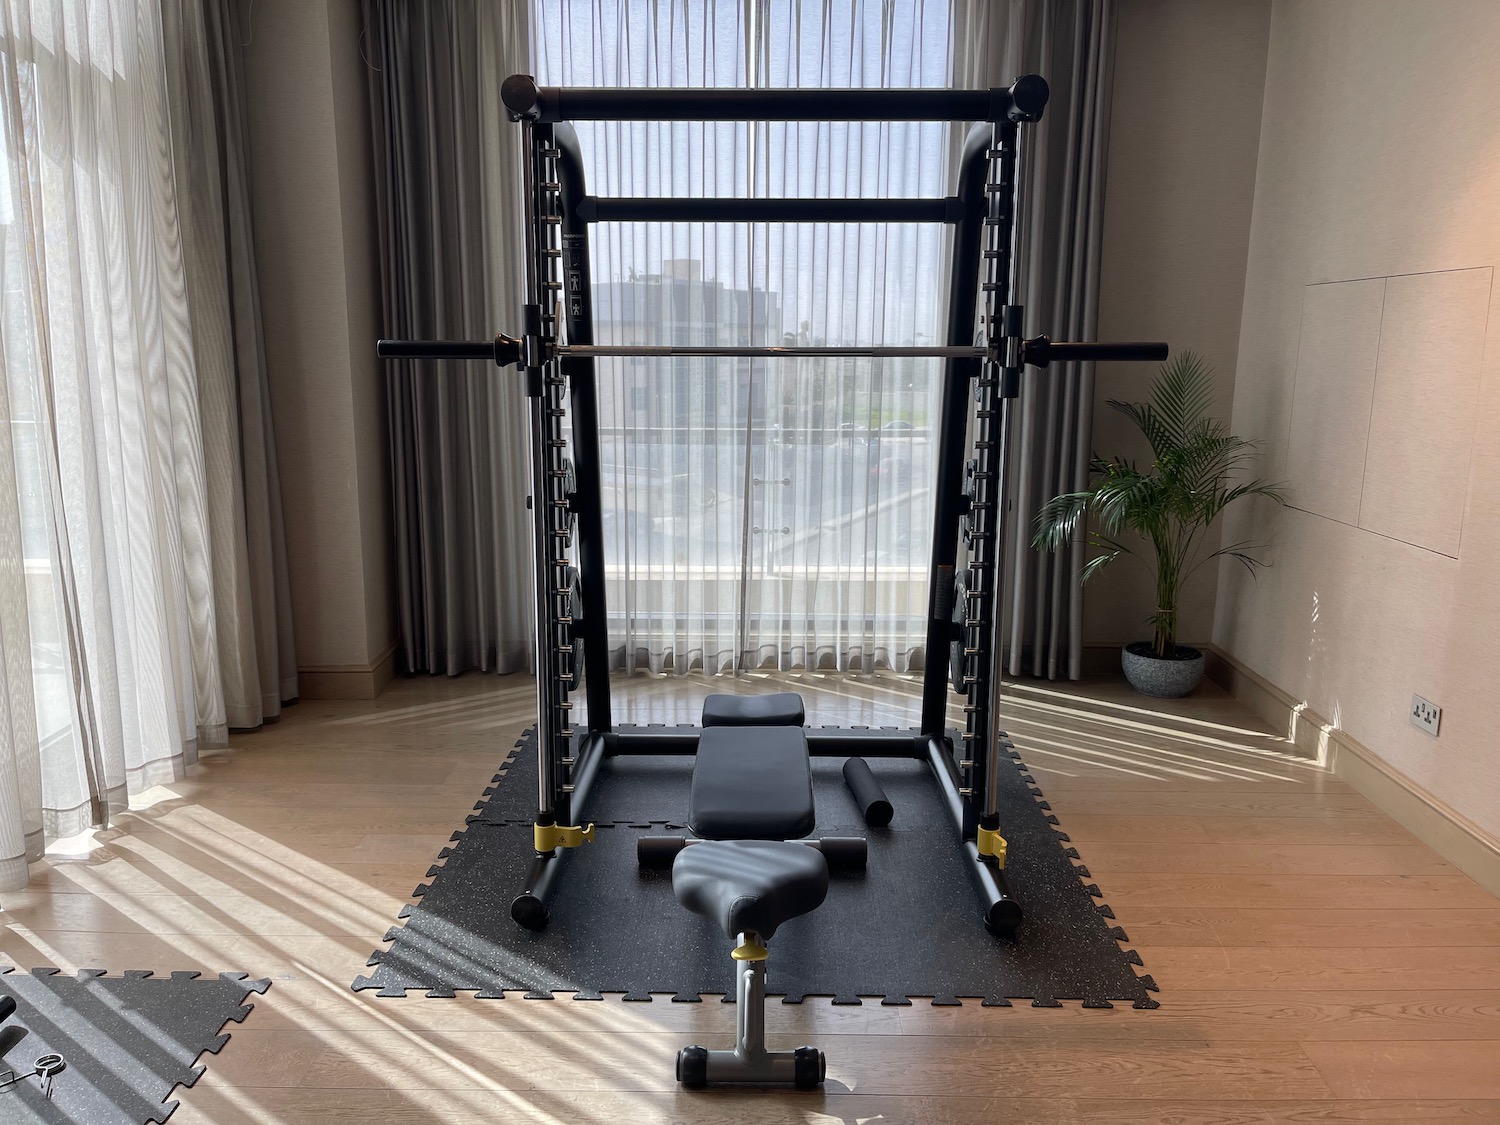 a gym machine in a room